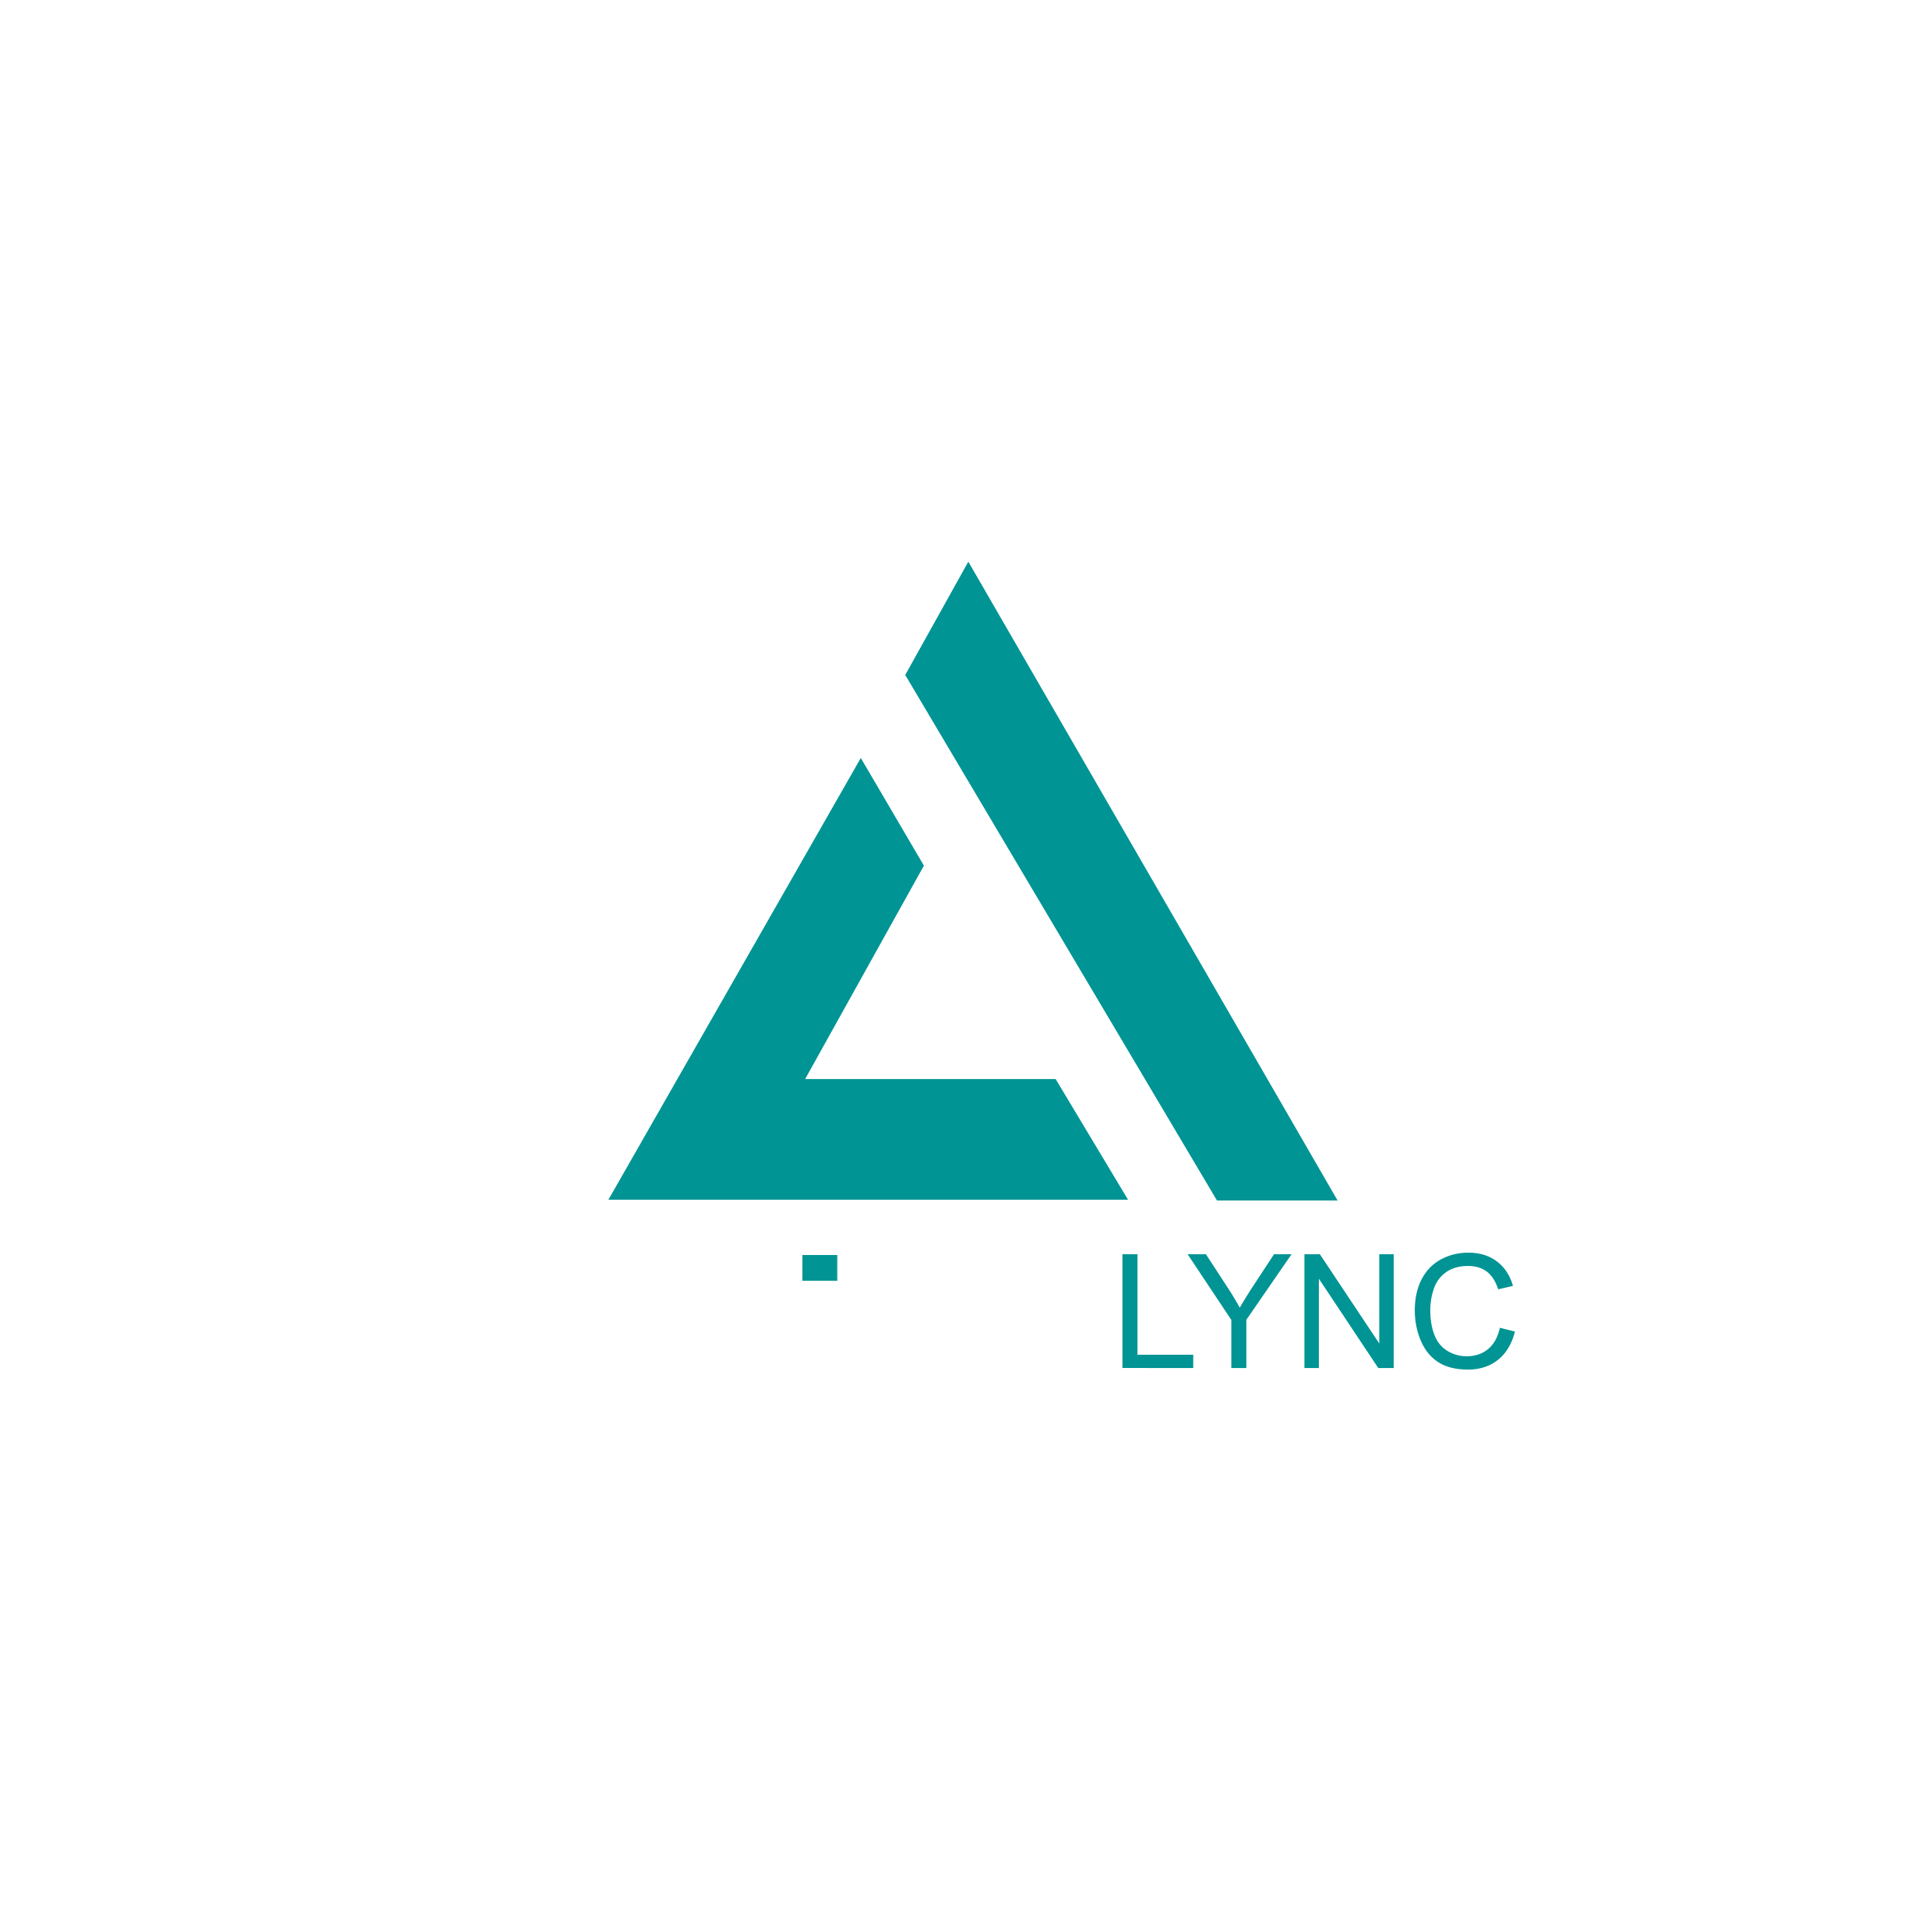 Active Lync on black background